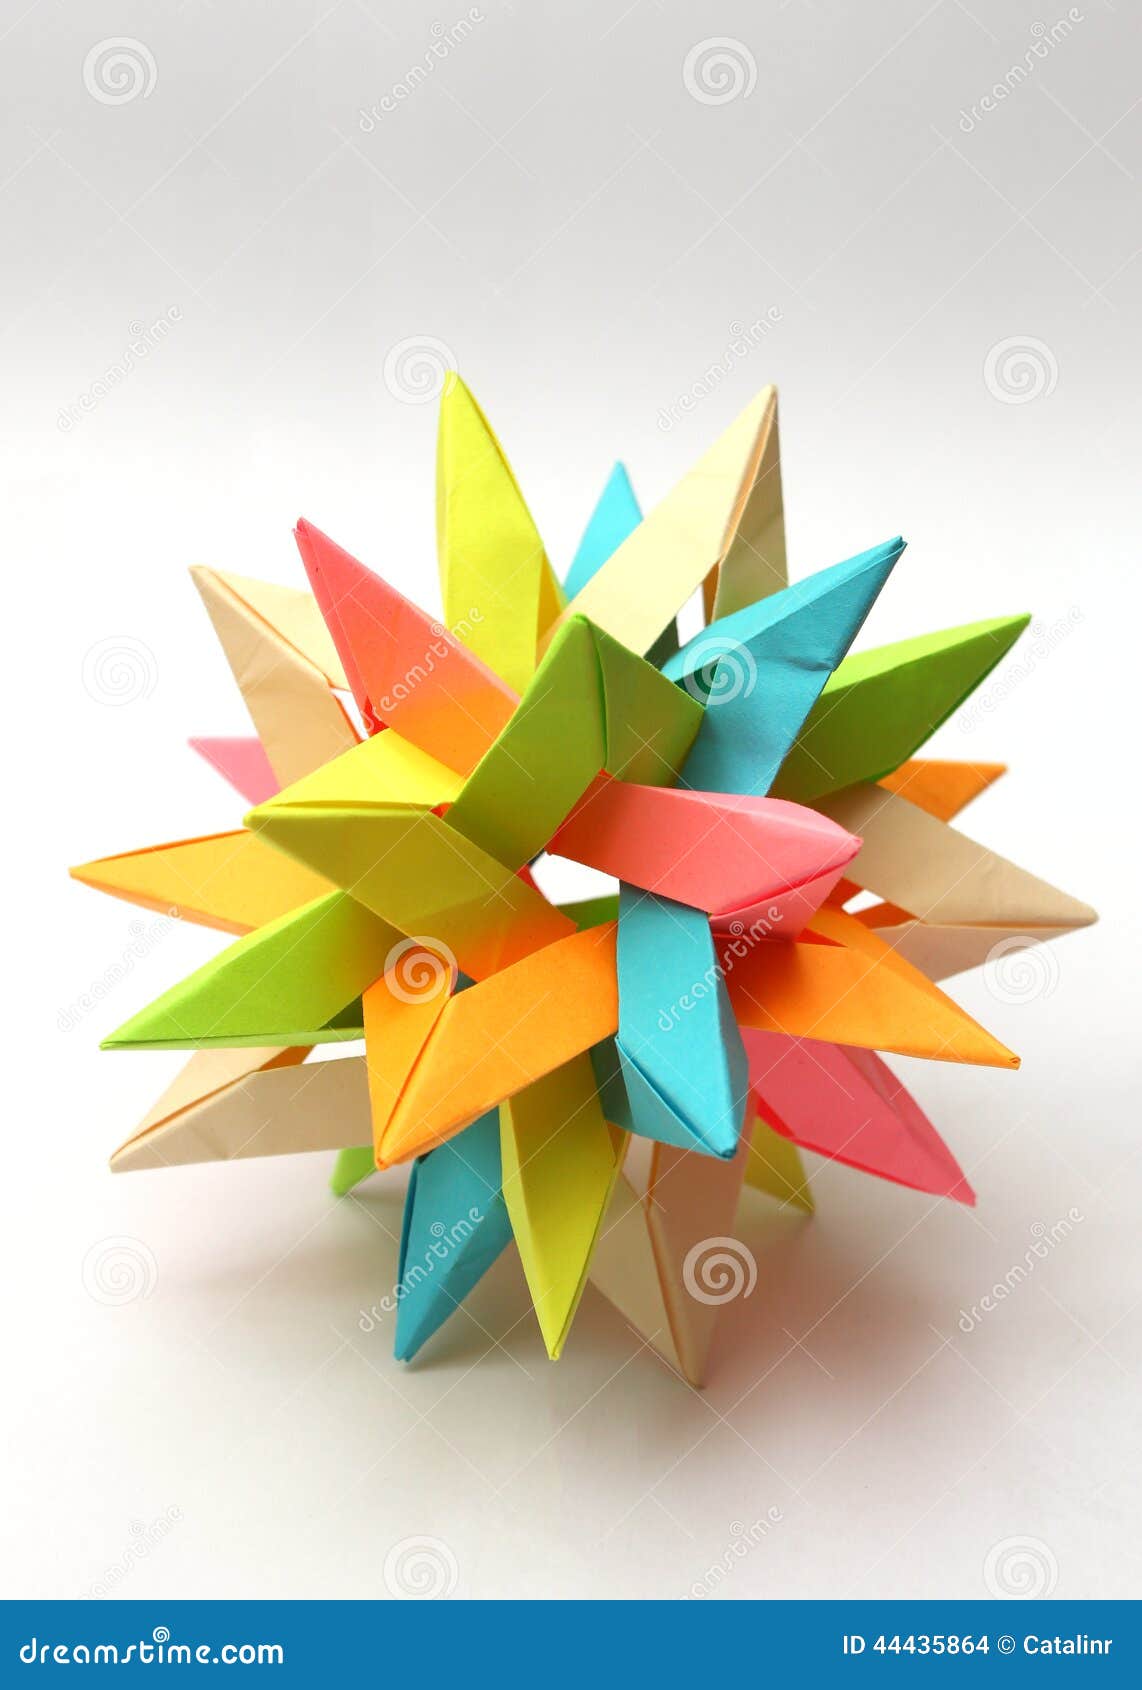 colorful modular origami star